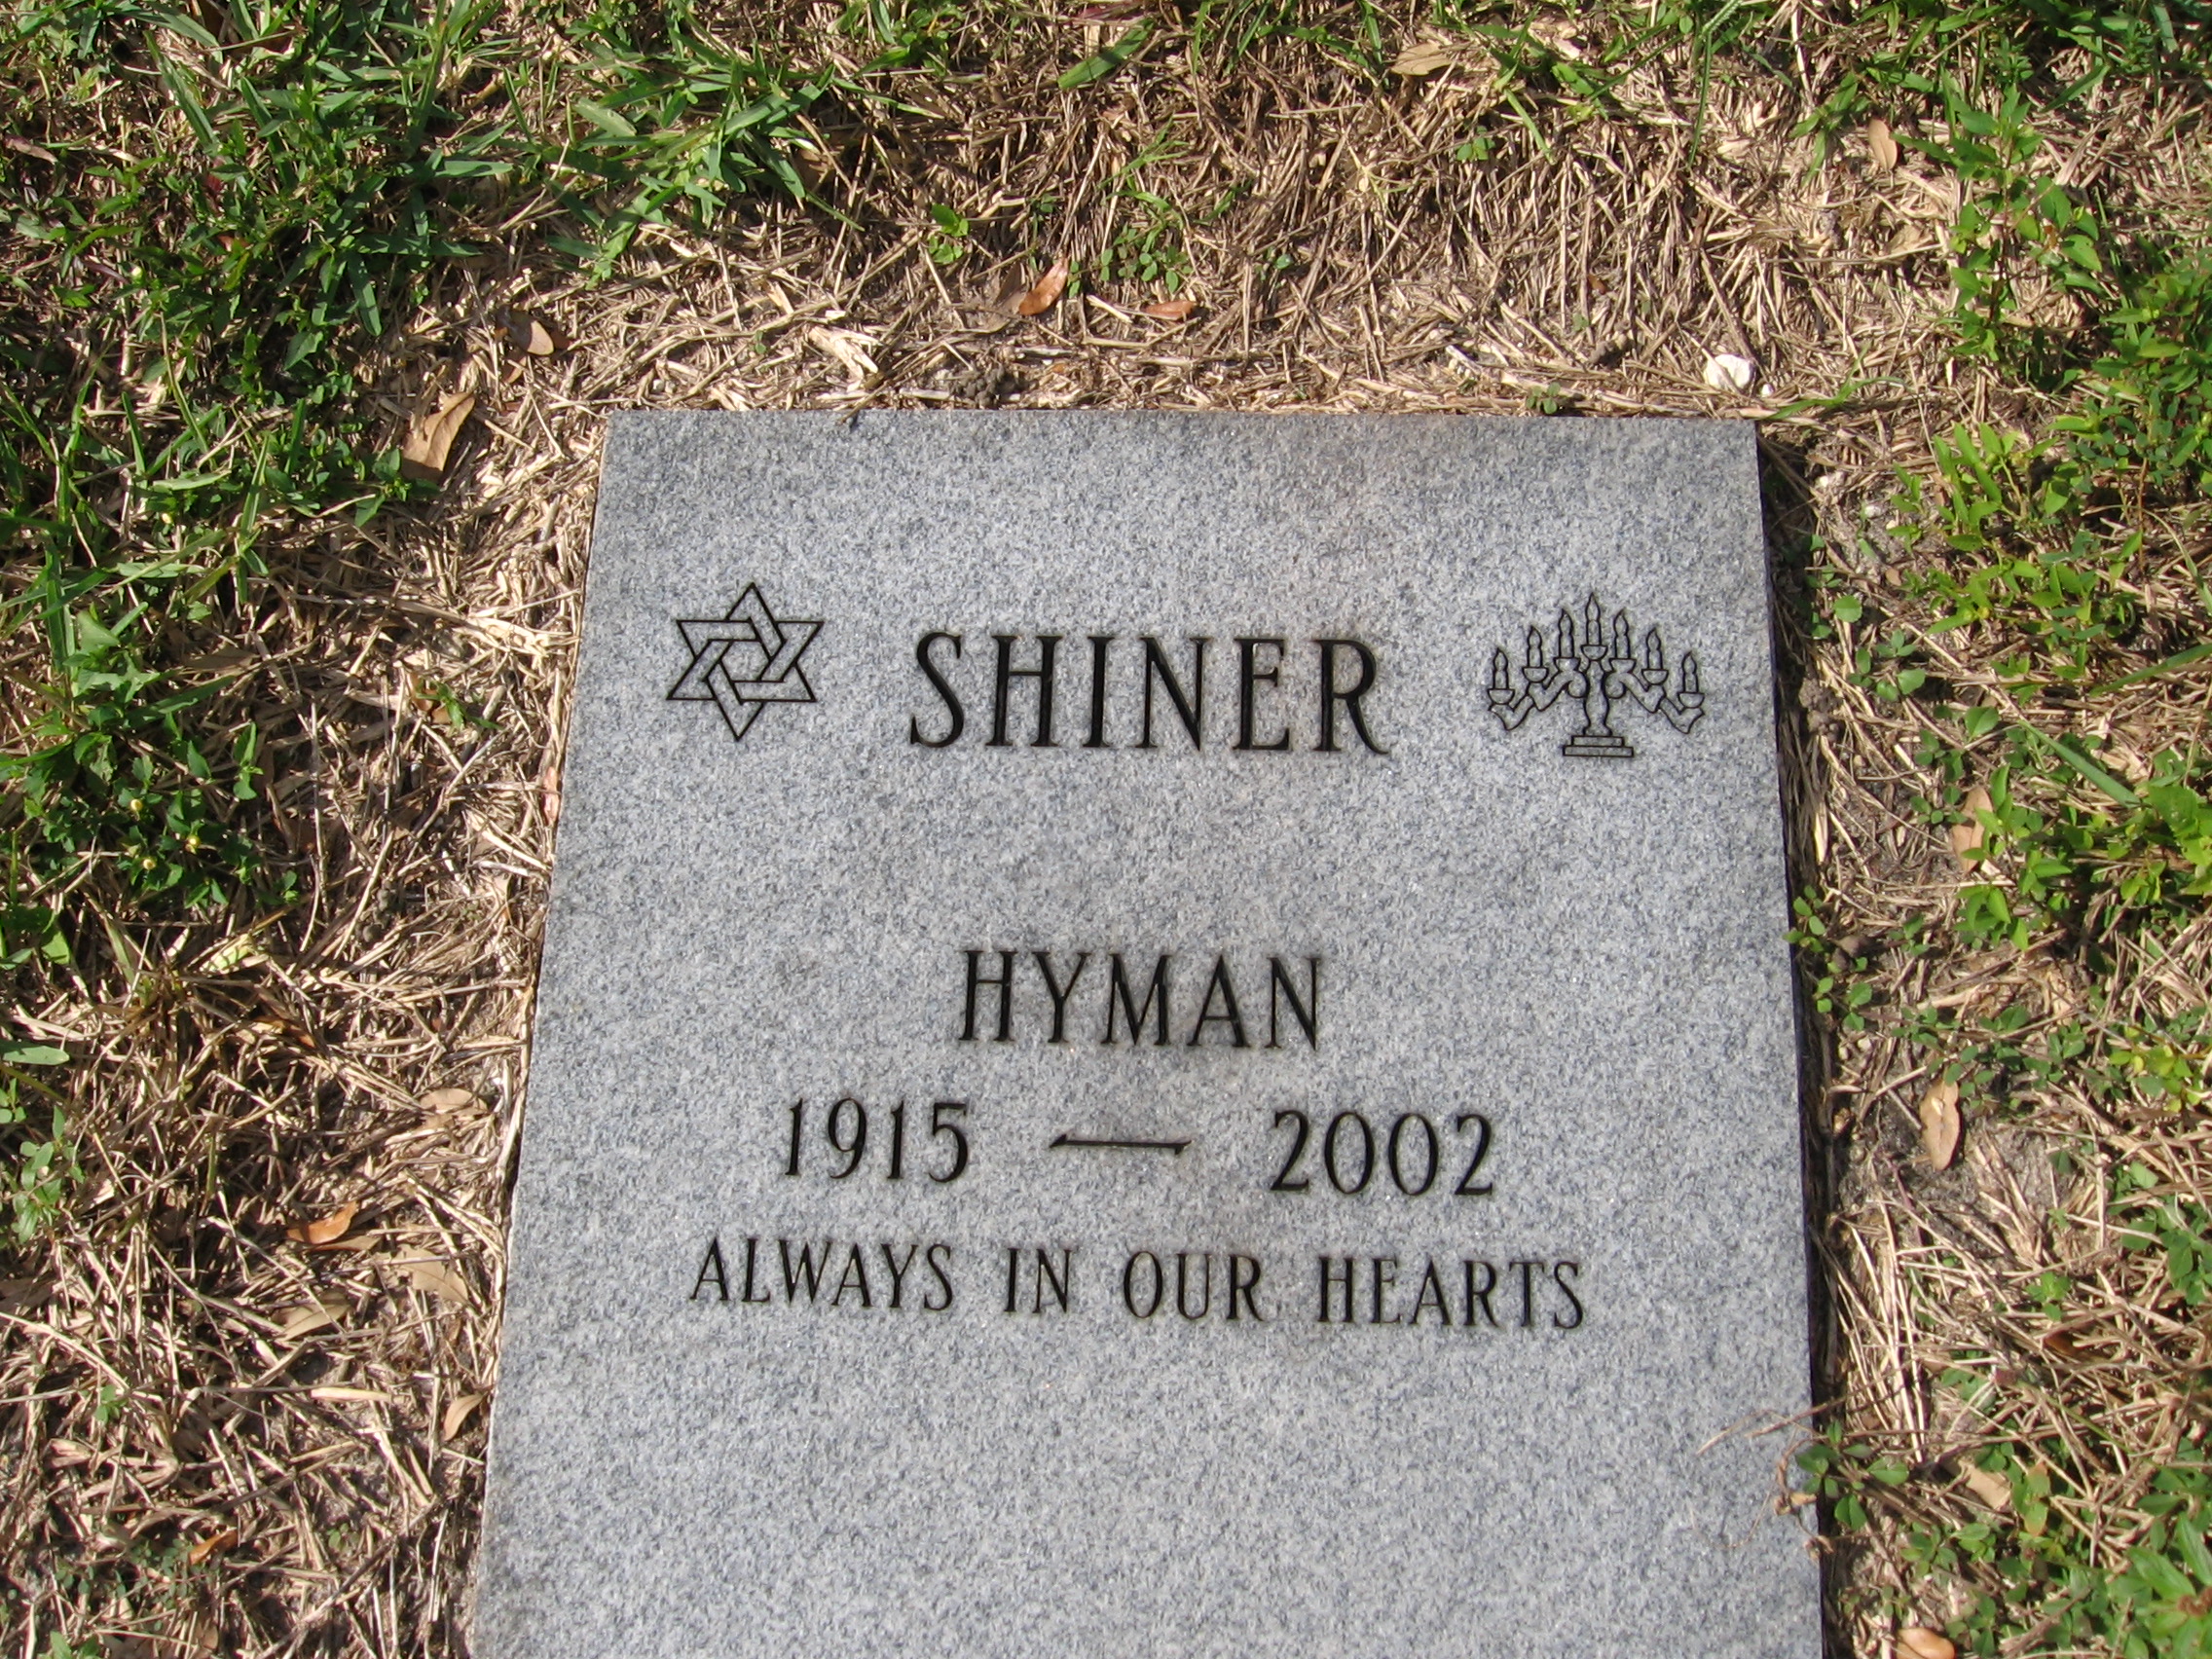 Hyman Shiner